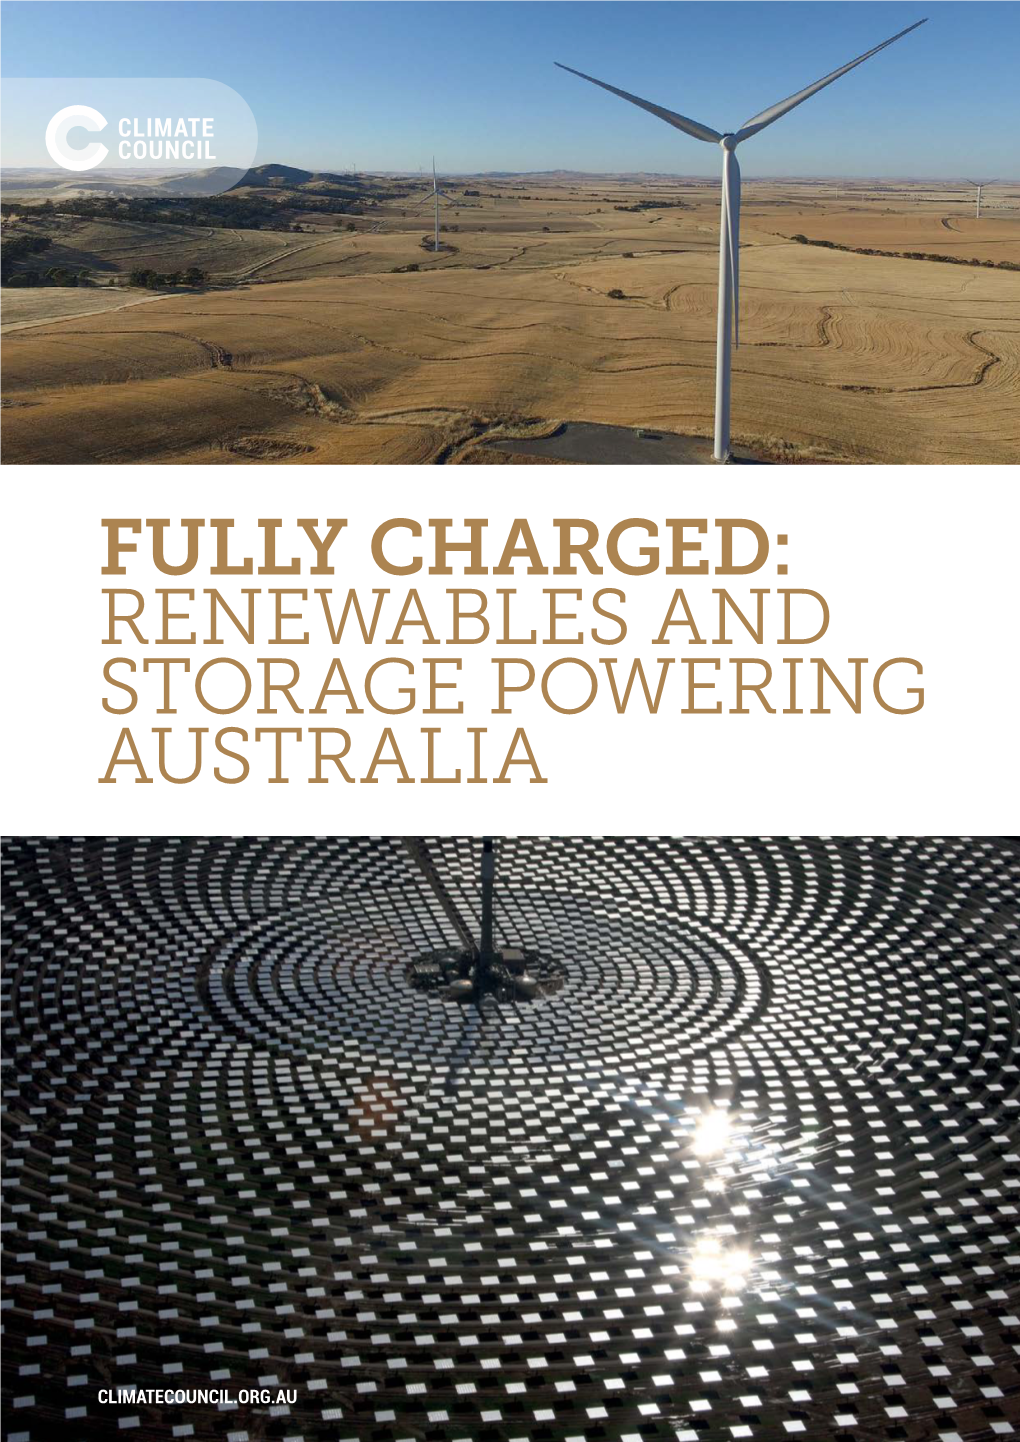 Renewables and Storage Powering Australia